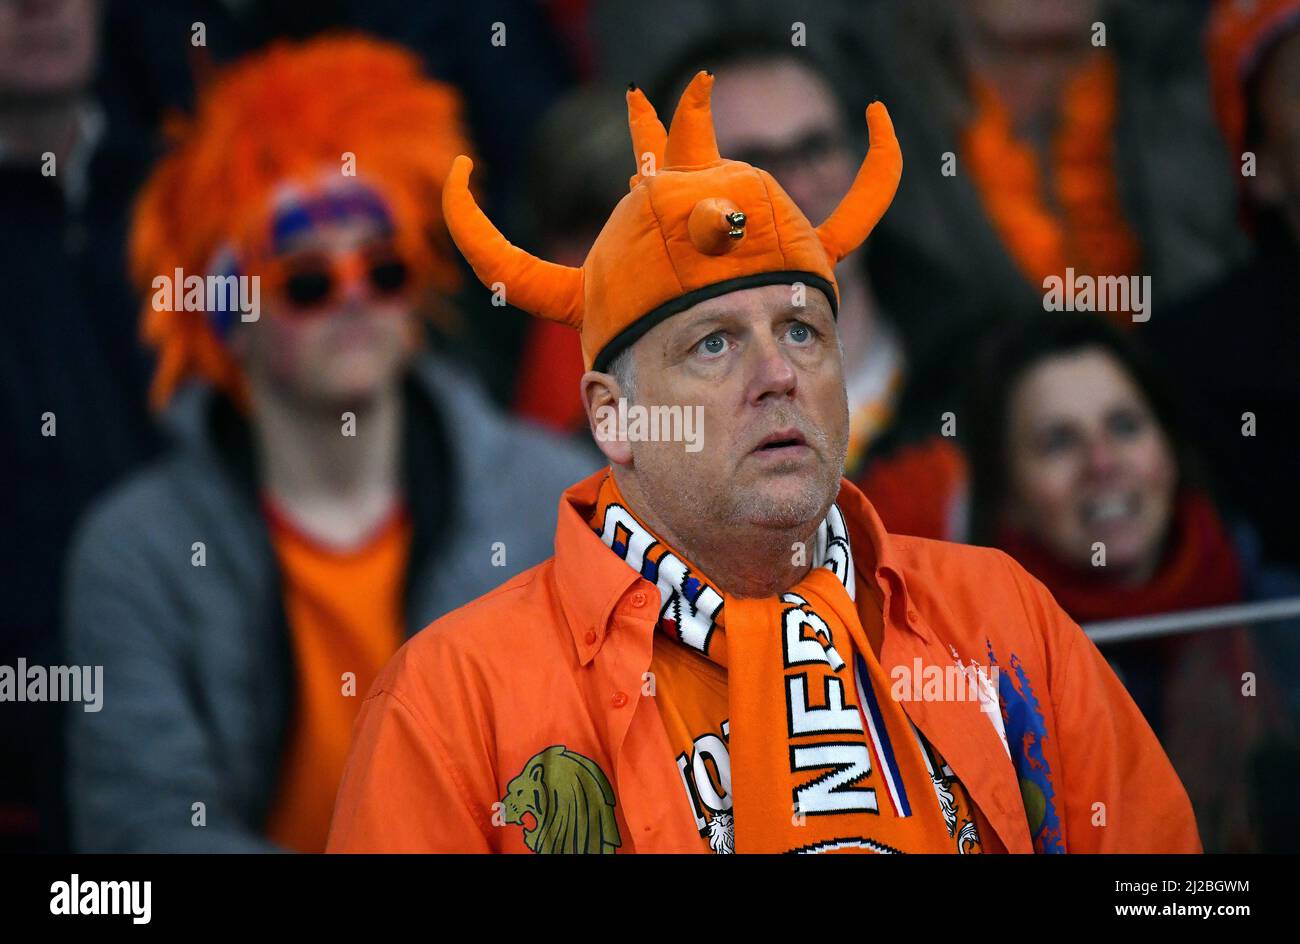 Friendly match, Amsterdam Arena: Netherlands vs Germany; Dutch fan. Stock Photo